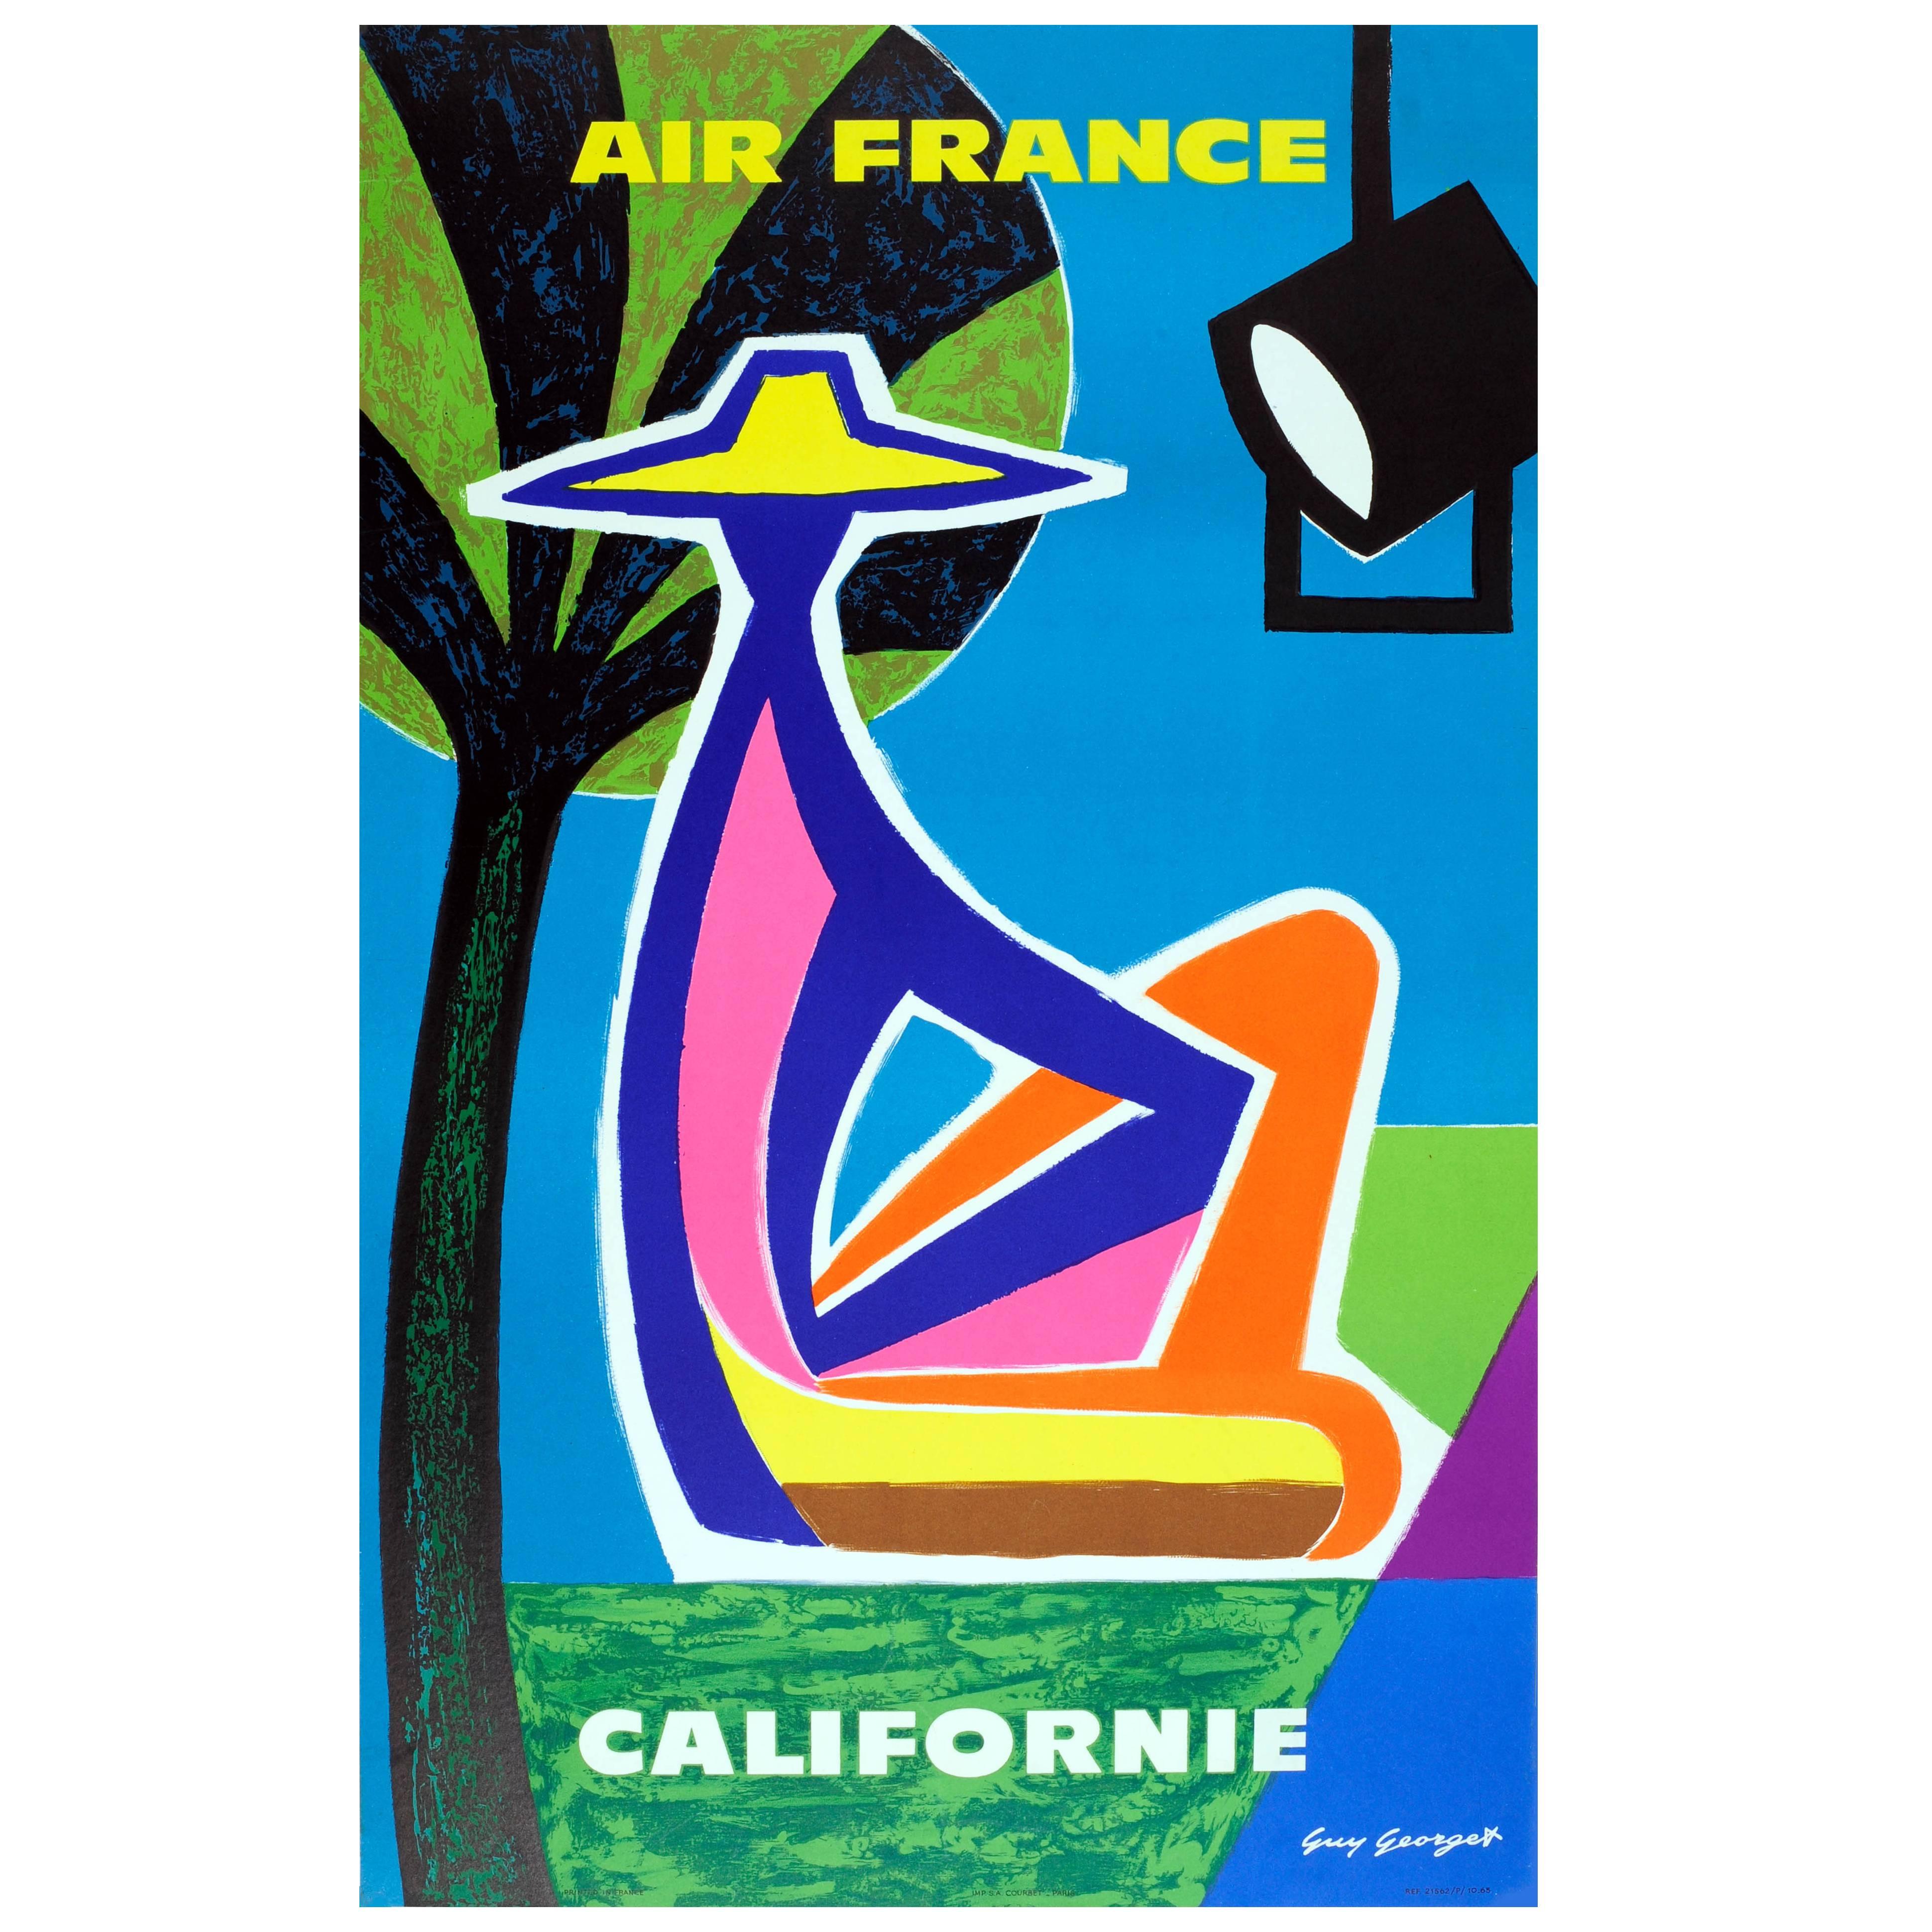 Original Vintage Air France Travel Poster by Guy Georget Advertising California